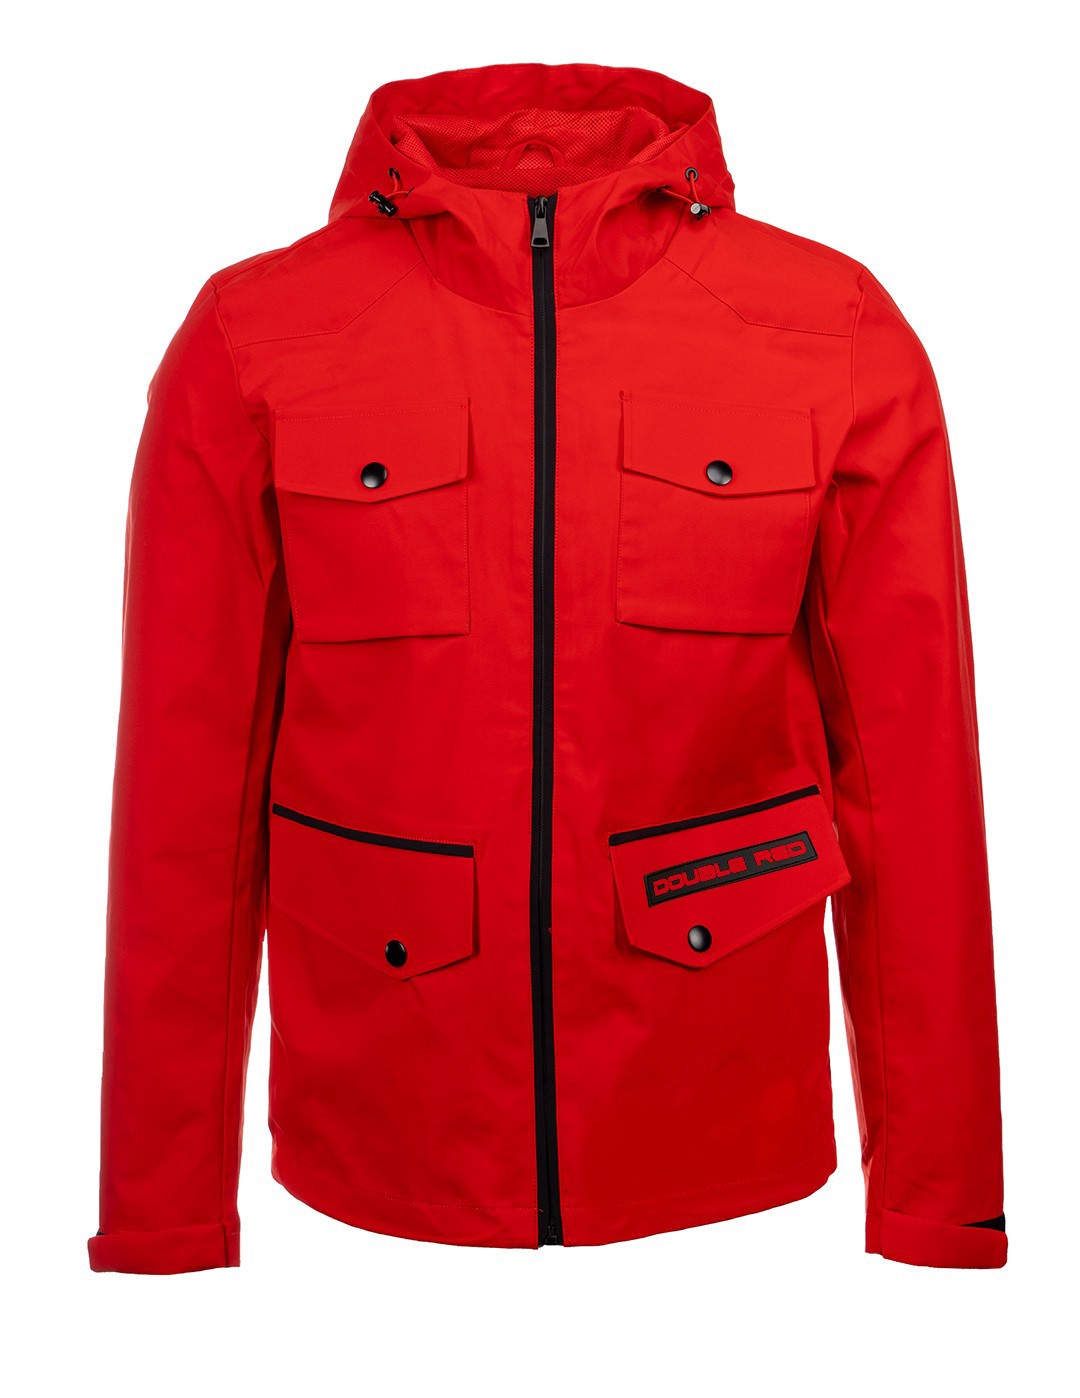 MONTECARLO Jacket Red